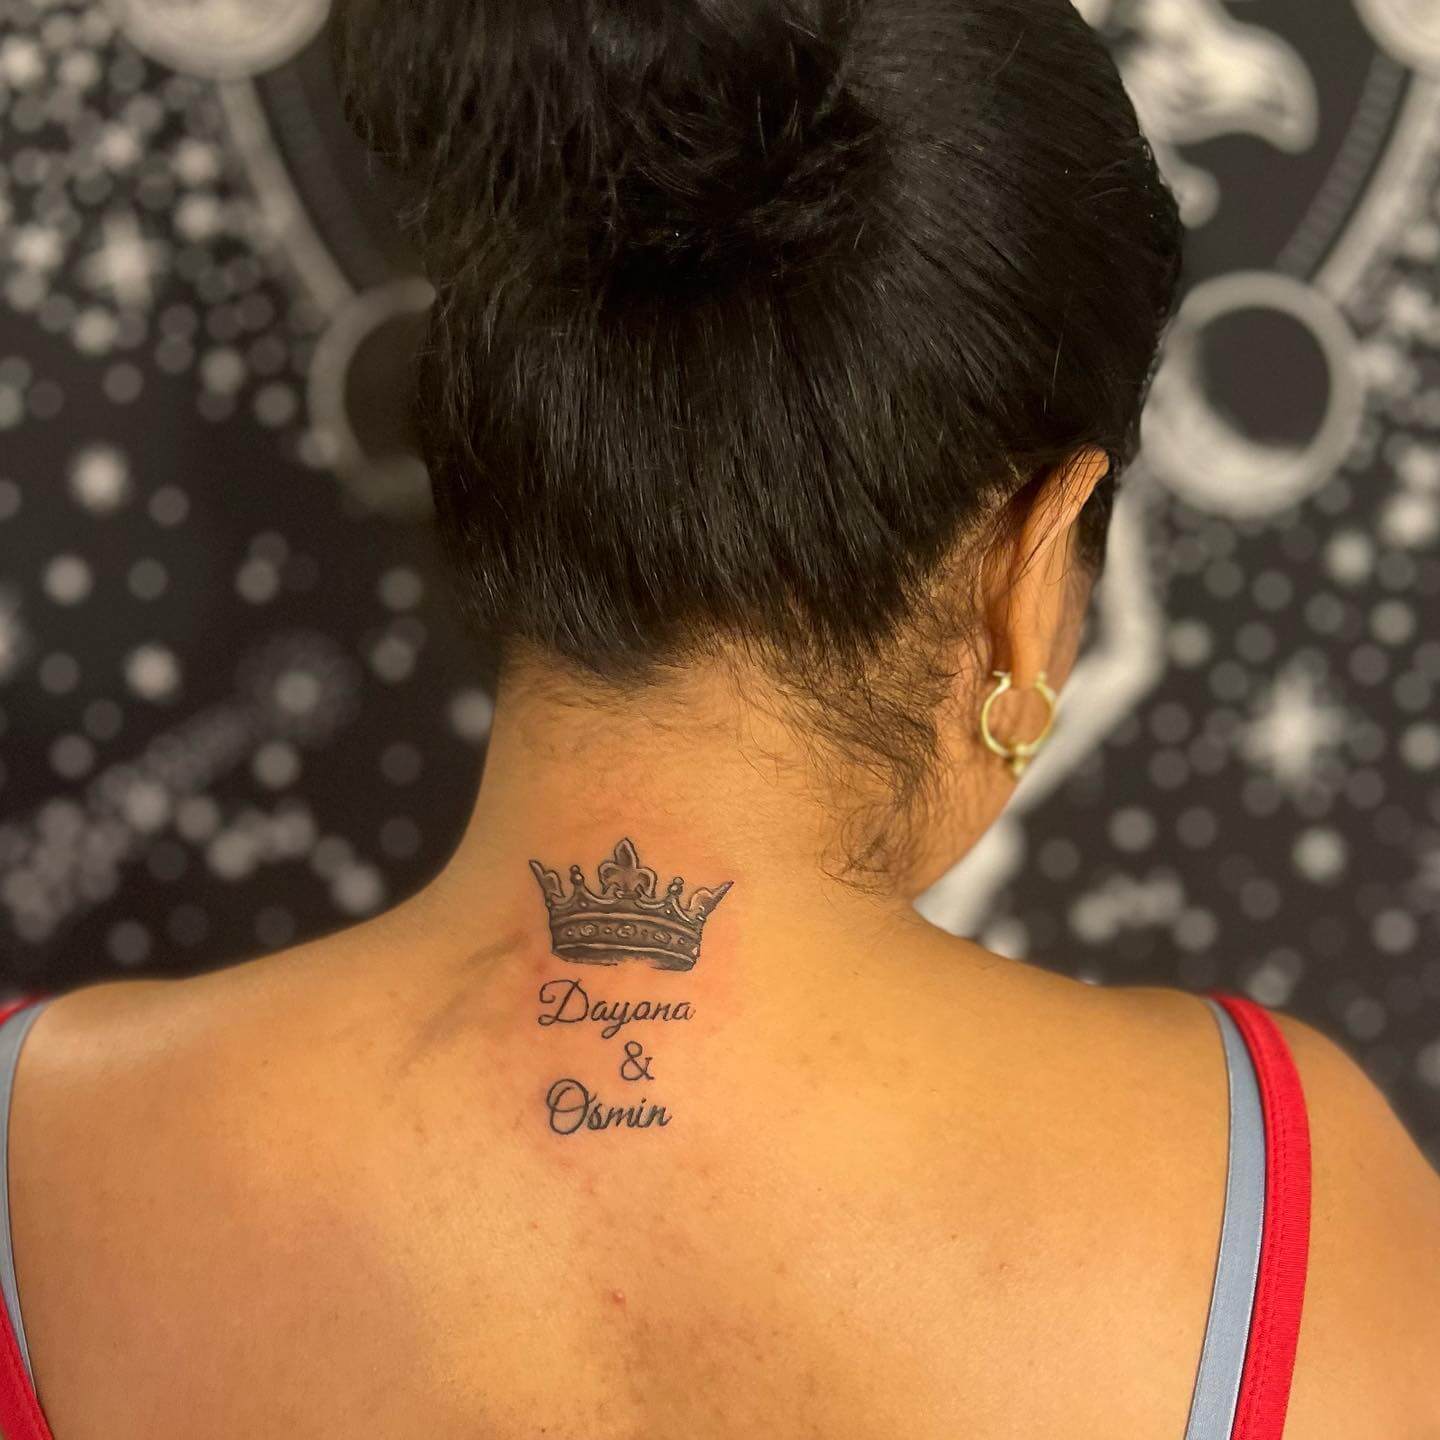 Crown Tattoo on Women's Neck